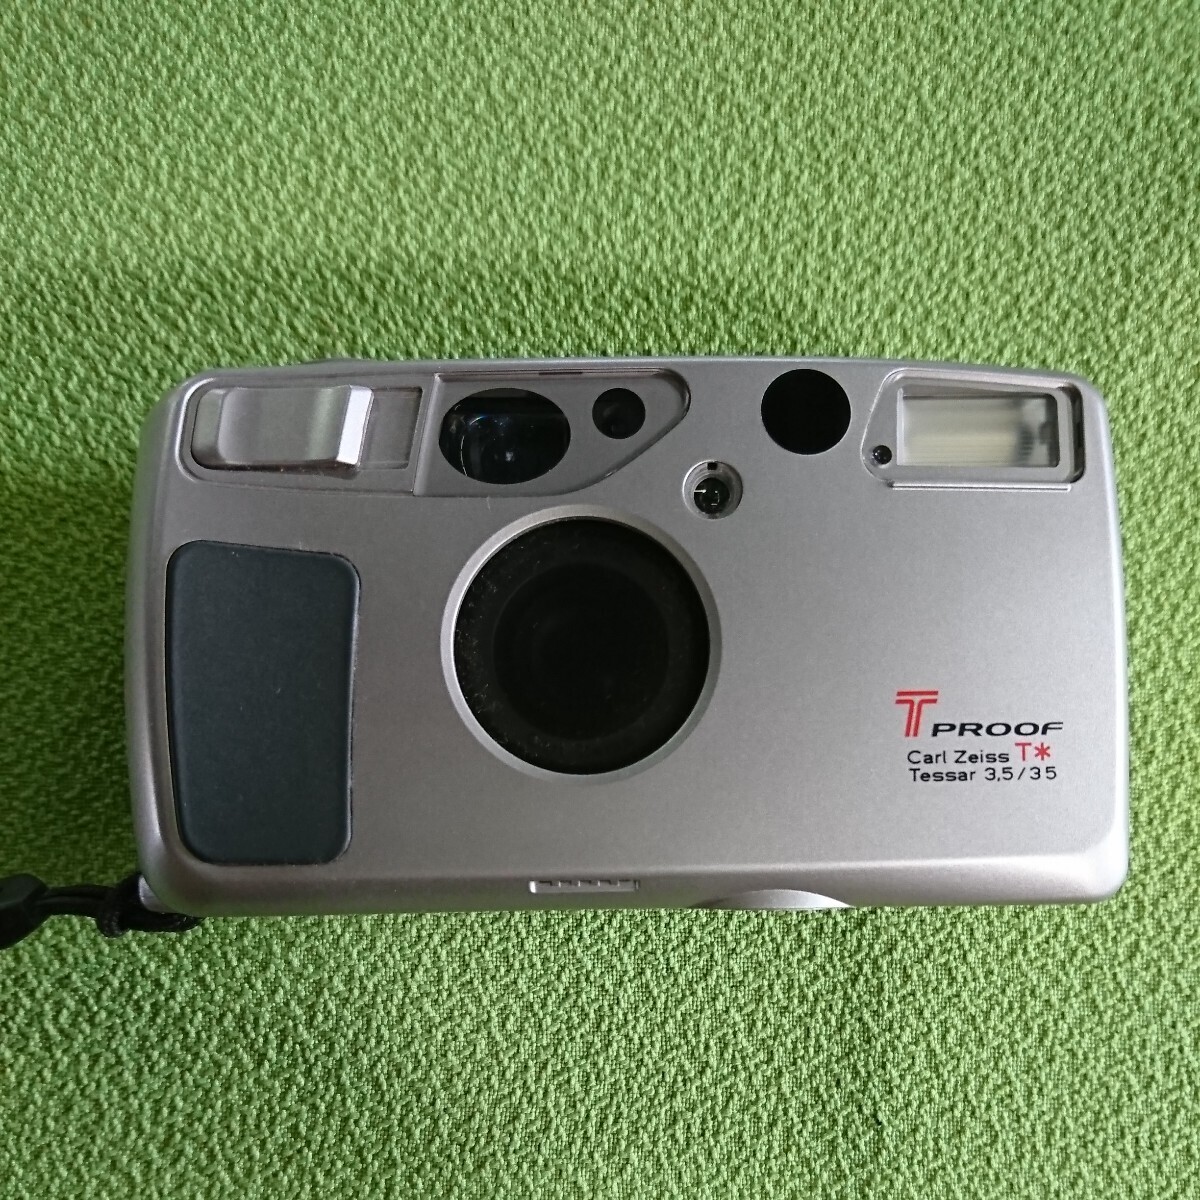 KYOCERA T PROOF Carl Zeiss Tessar 3.5 フイルムカメラ 現状販売品 ジャンク品_画像1